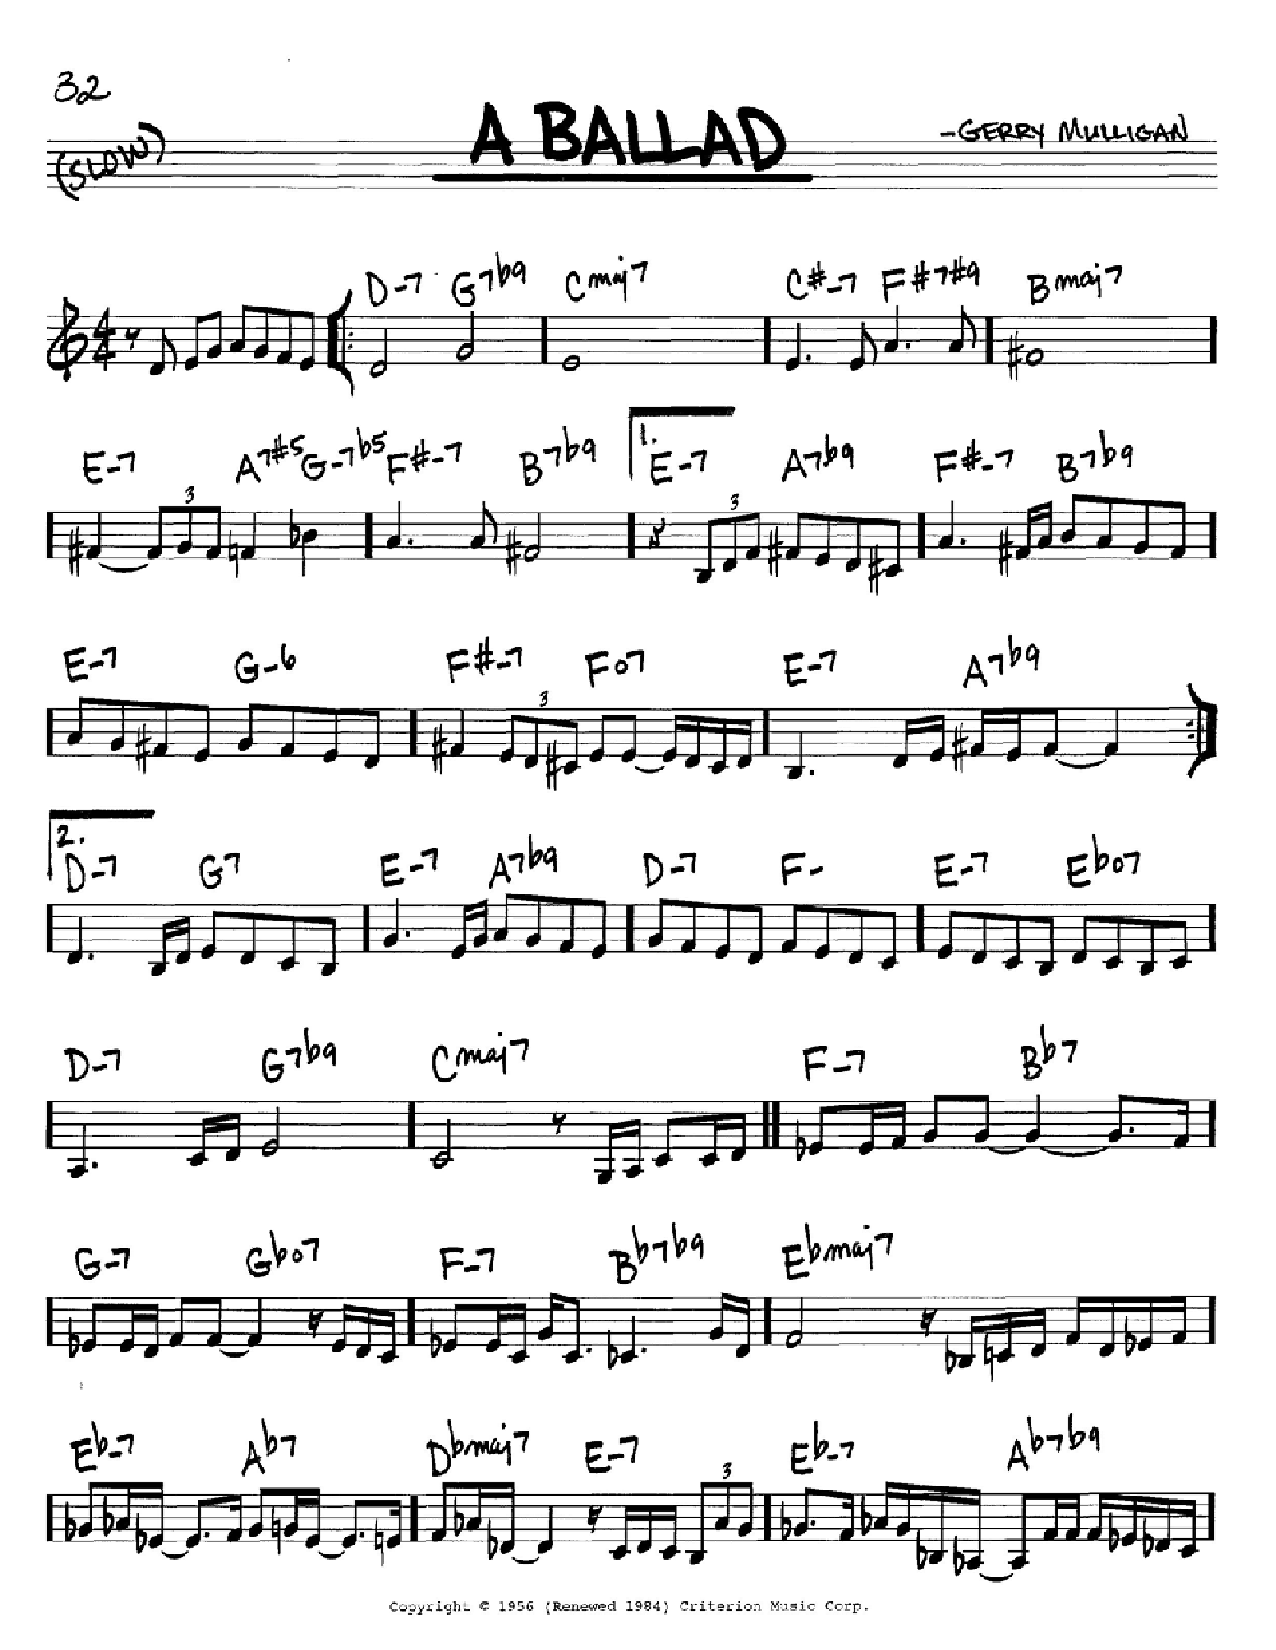 Gerry Mulligan A Ballad Sheet Music Notes & Chords for Baritone Sax Transcription - Download or Print PDF